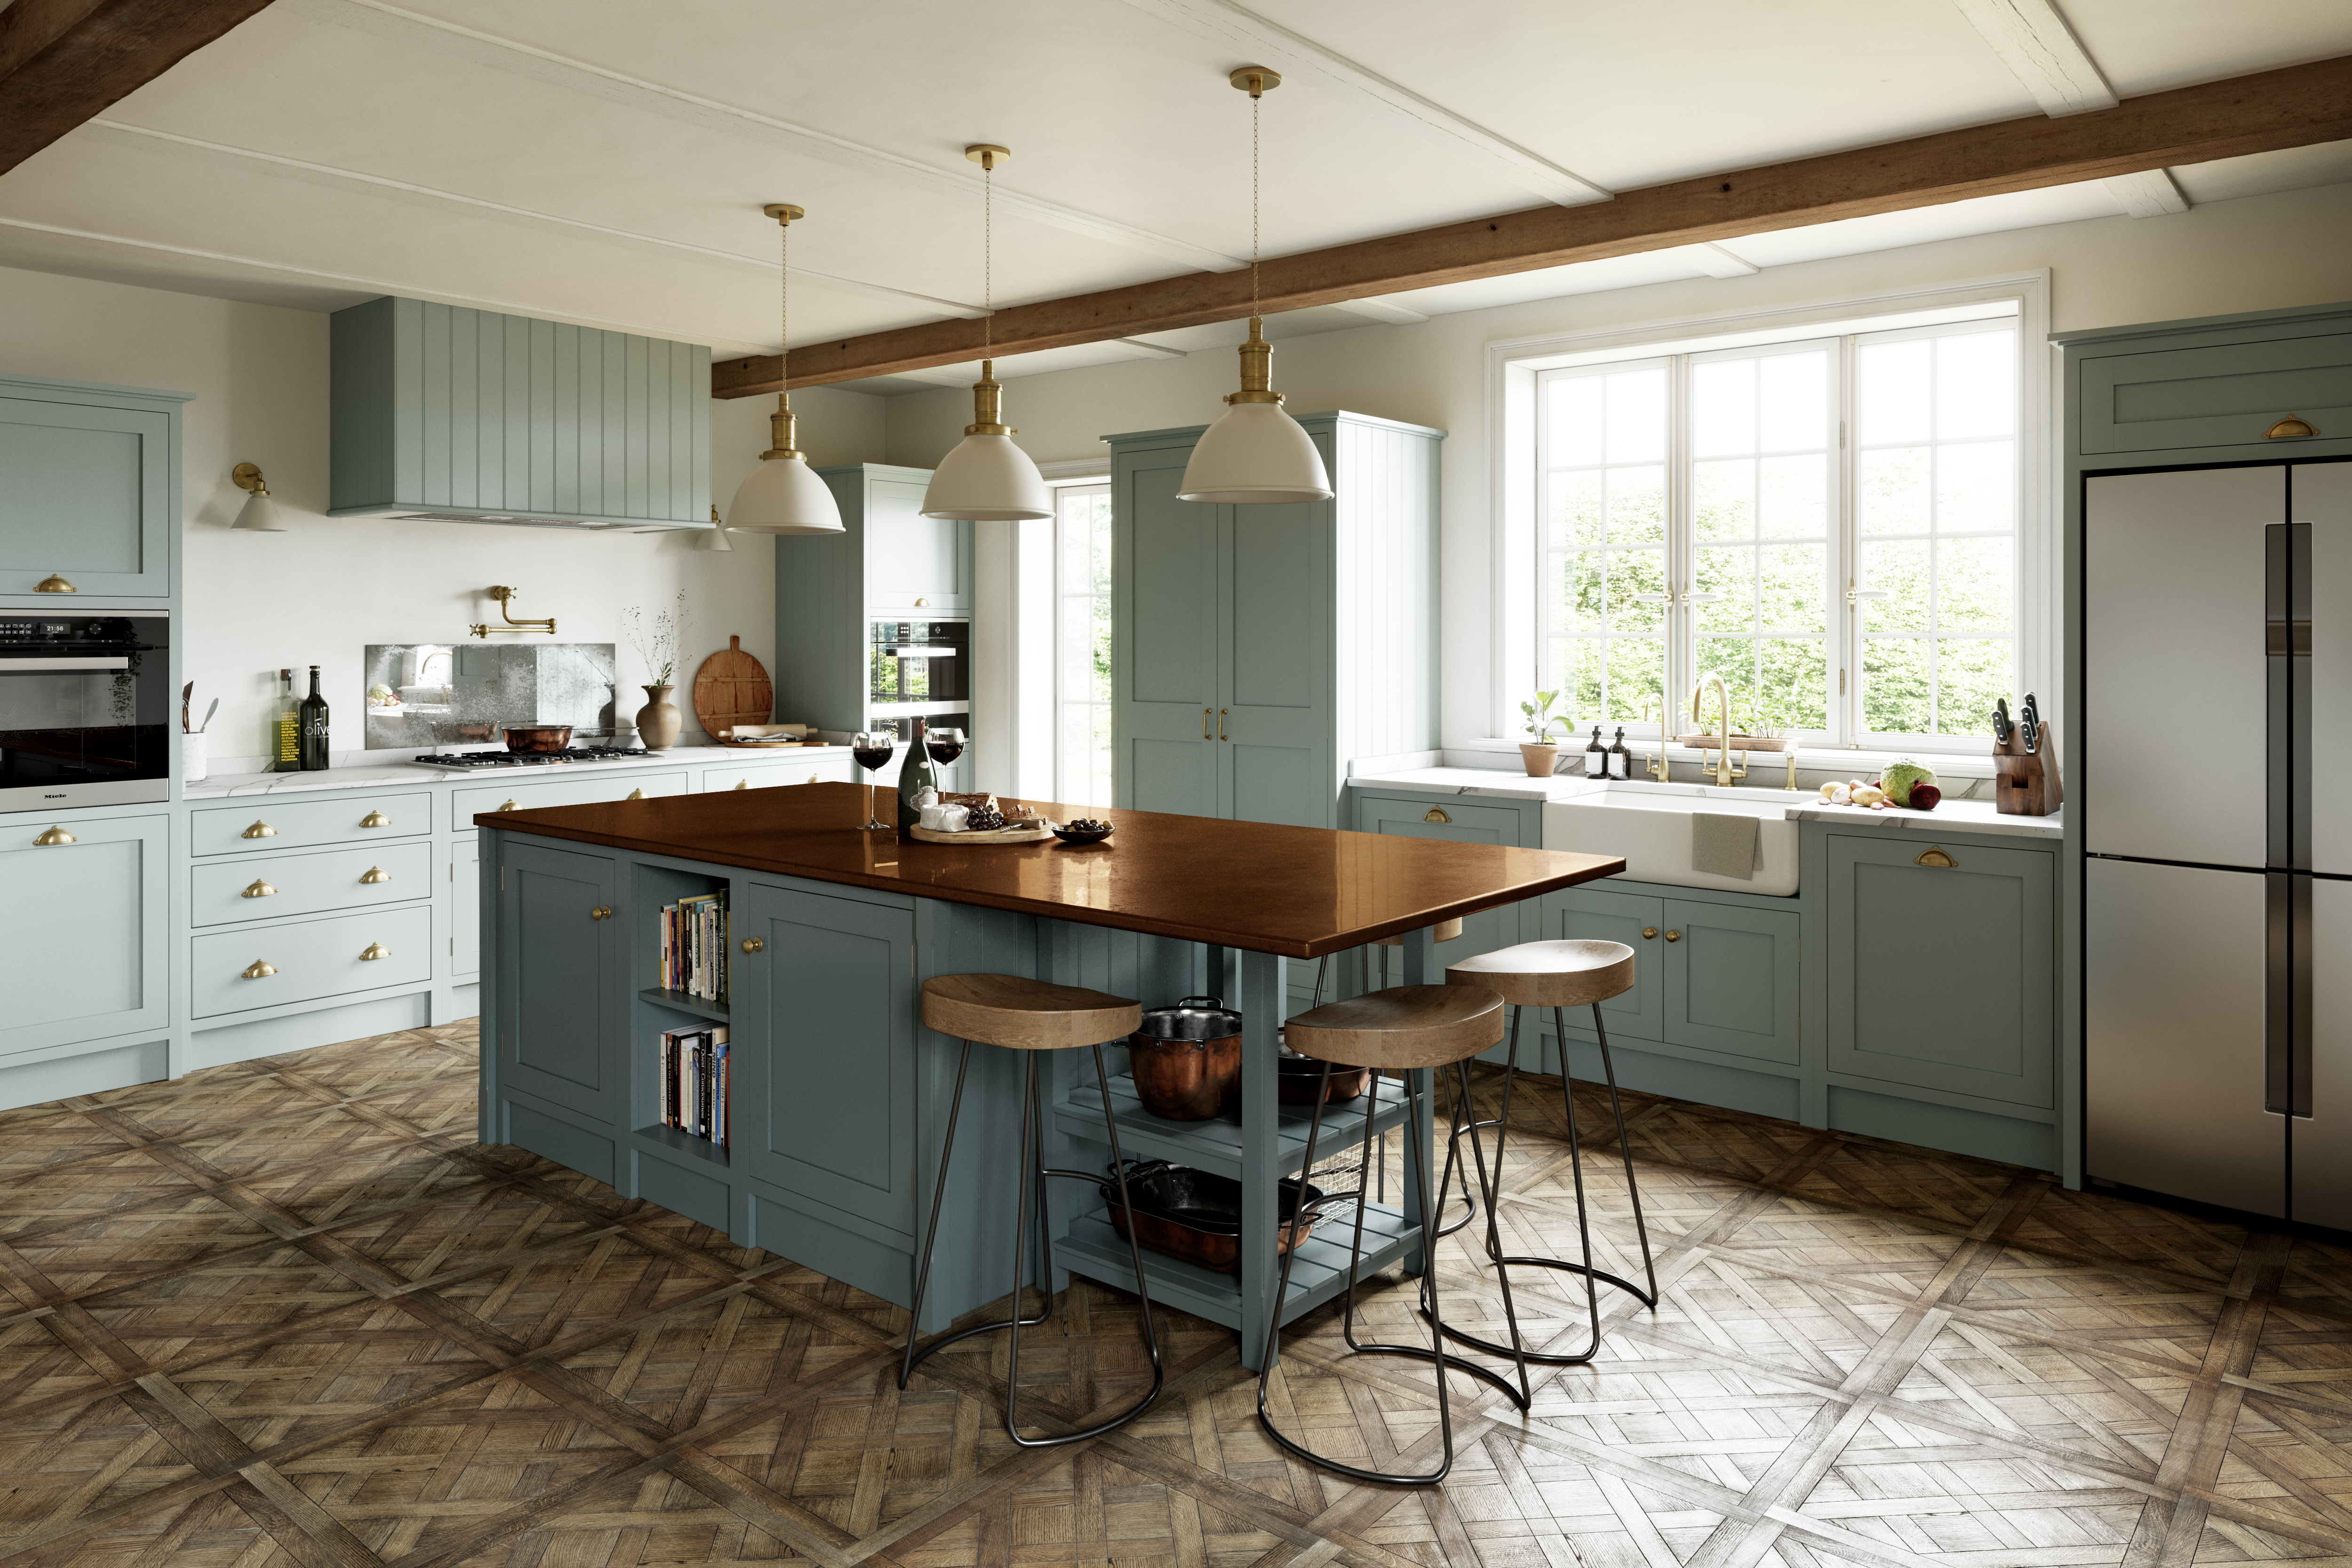 Ex display Alton Hampshire London Kingham shaker style classic bespoke kitchen luxury hand painted handmade.